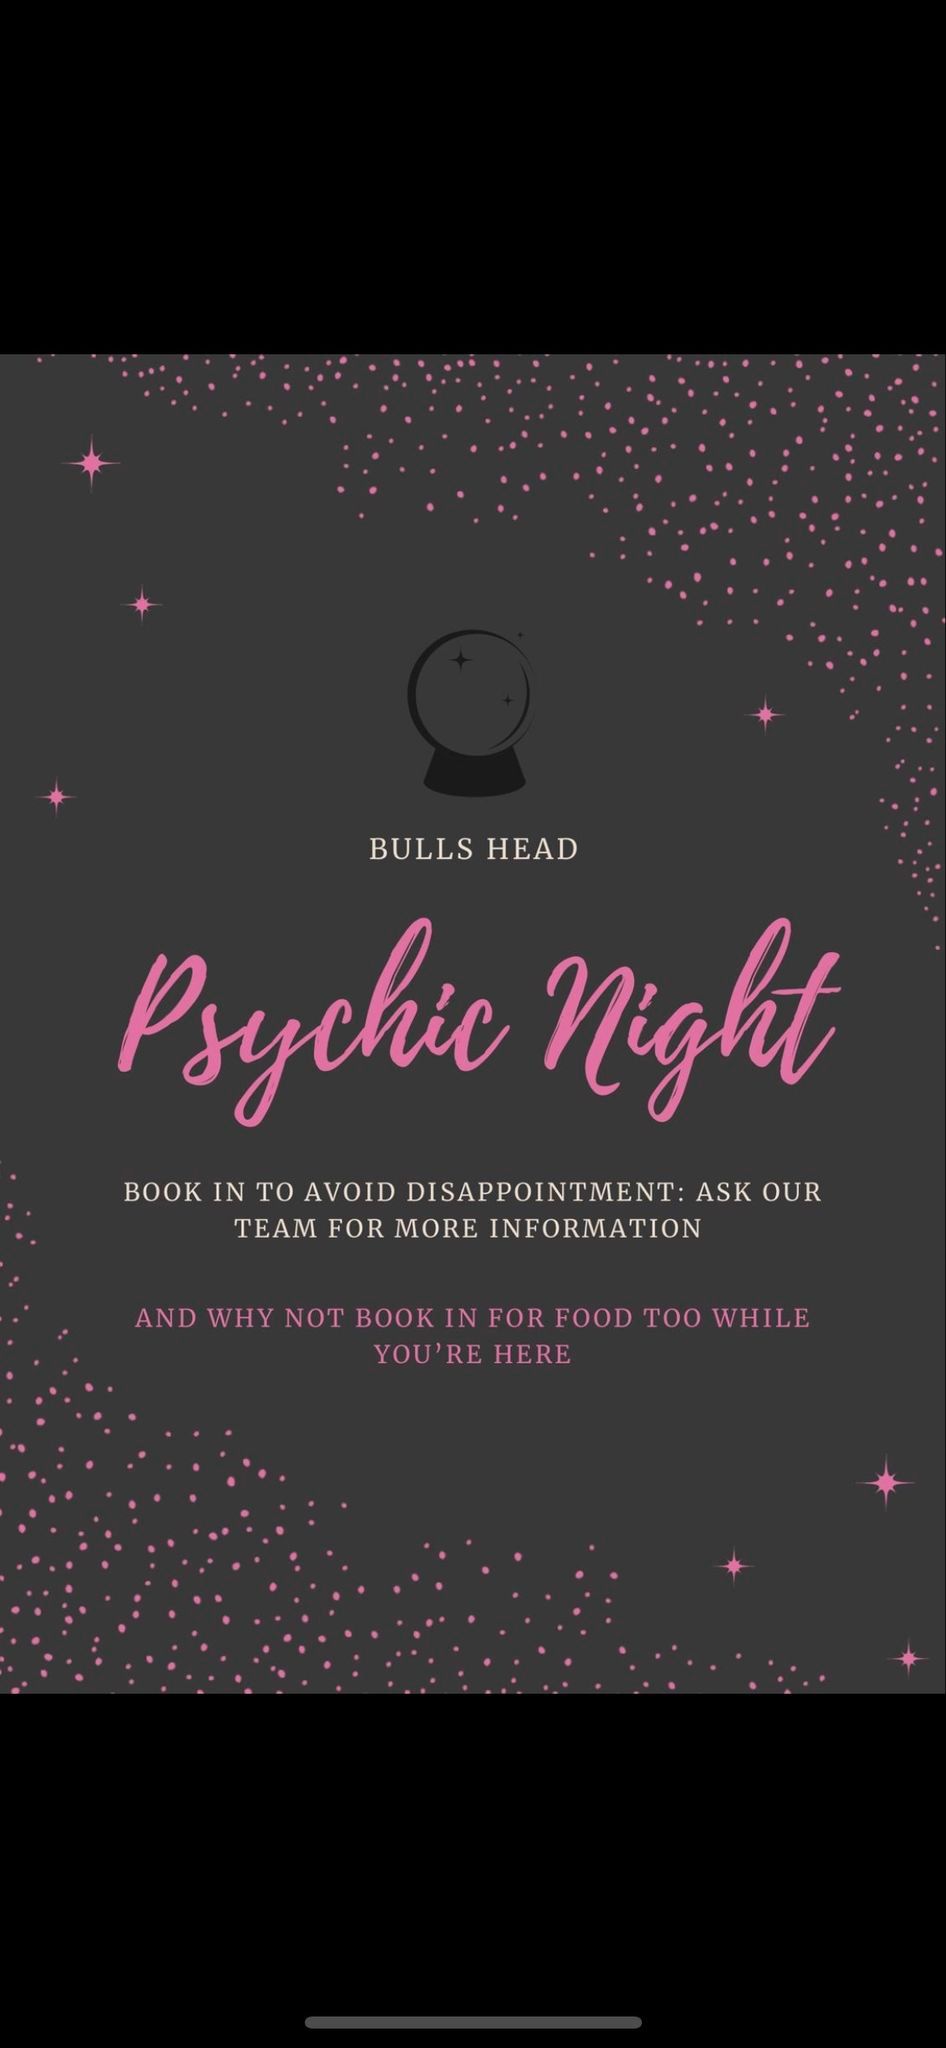 Psychic Night @ The Bulls Head?